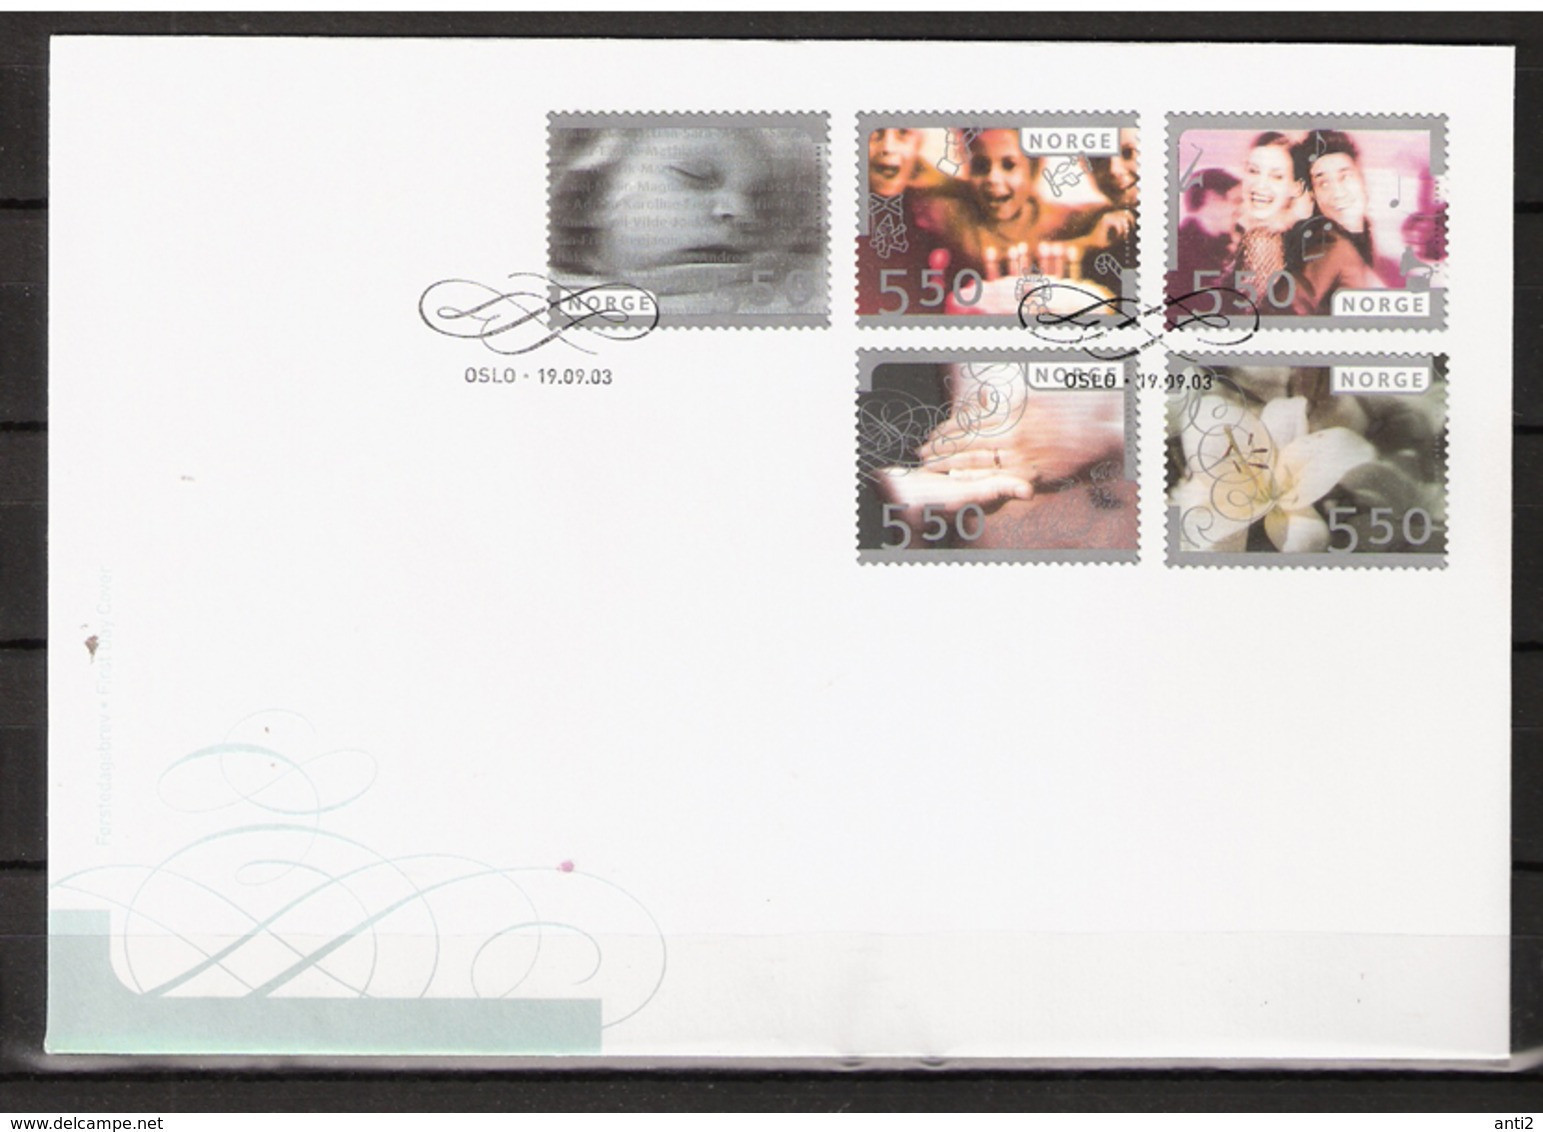 Norway Norge  2003 Greeting Stamps  Mi 1474-1478 FDC - Briefe U. Dokumente